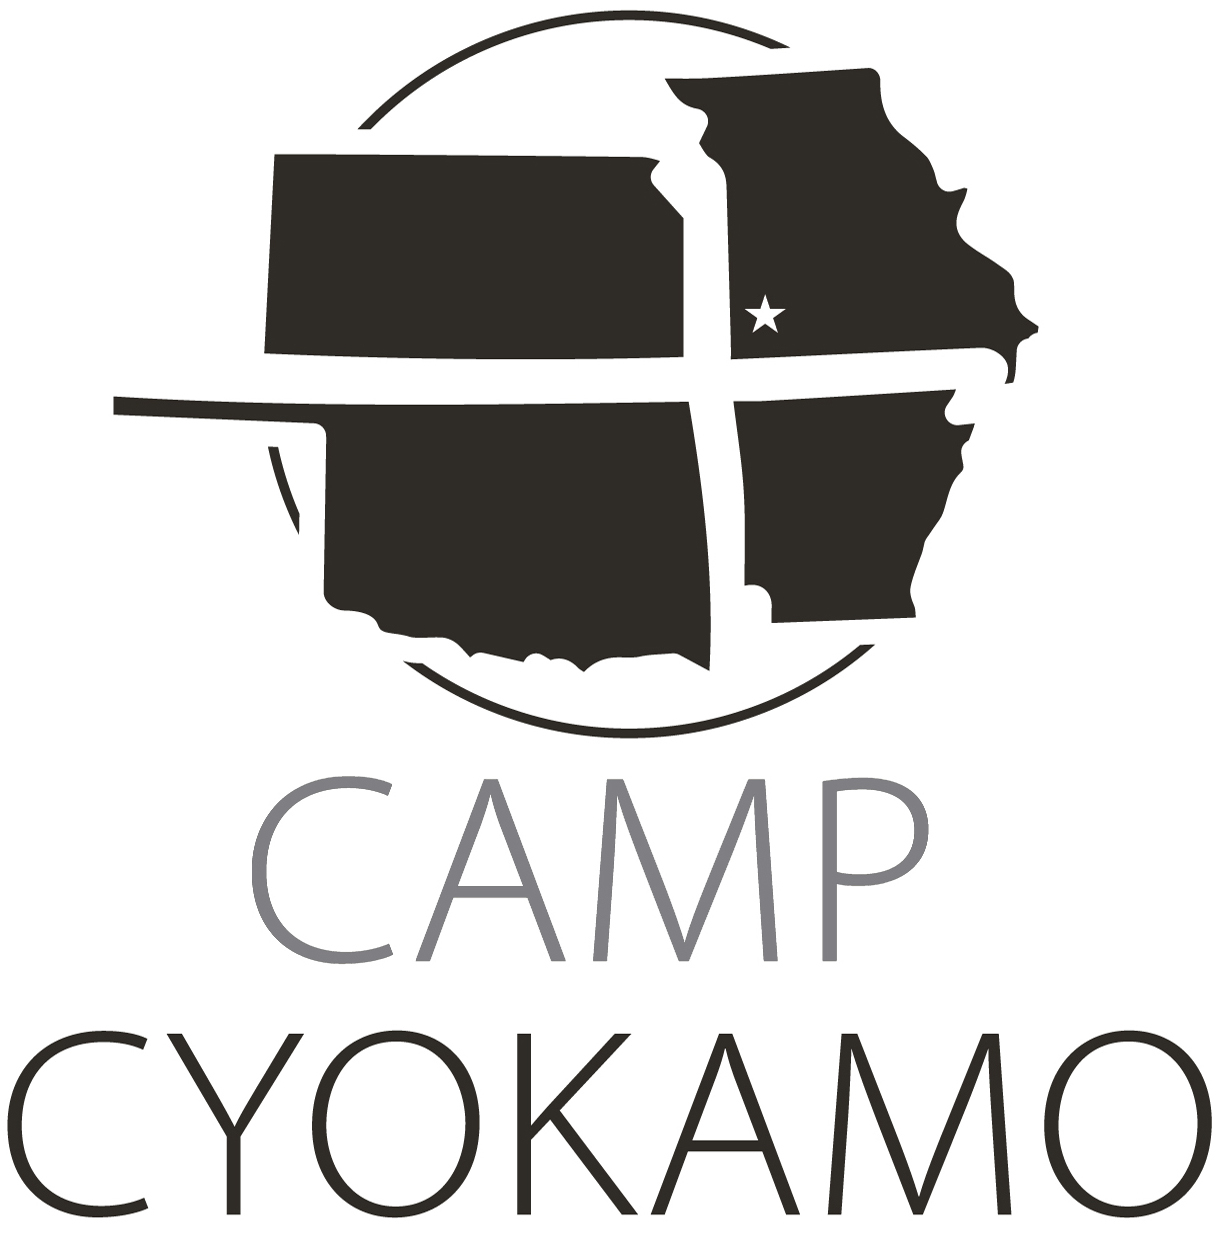 Camp Cyokamo Stacked Centered (gray) w star.jpg